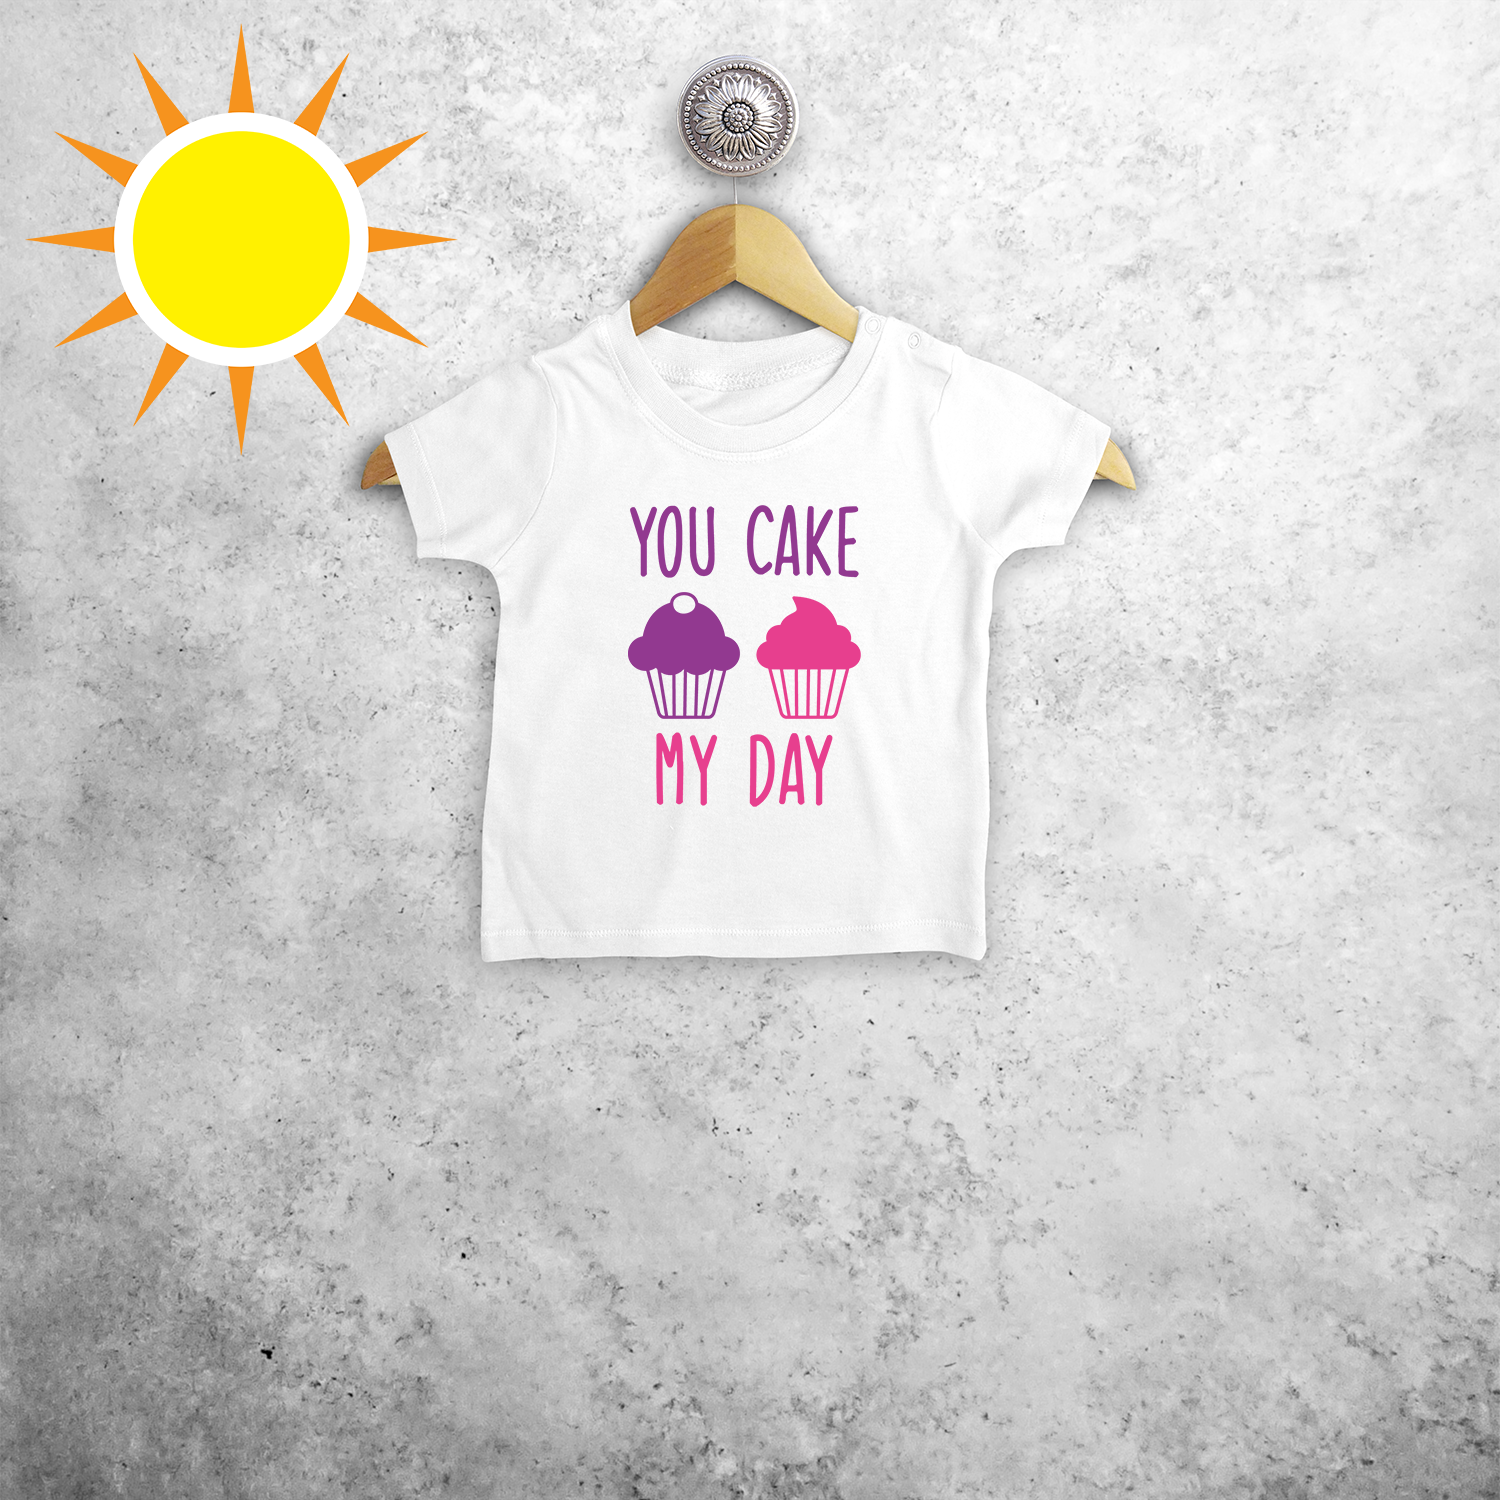 'You cake my day' magic baby shortsleeve shirt